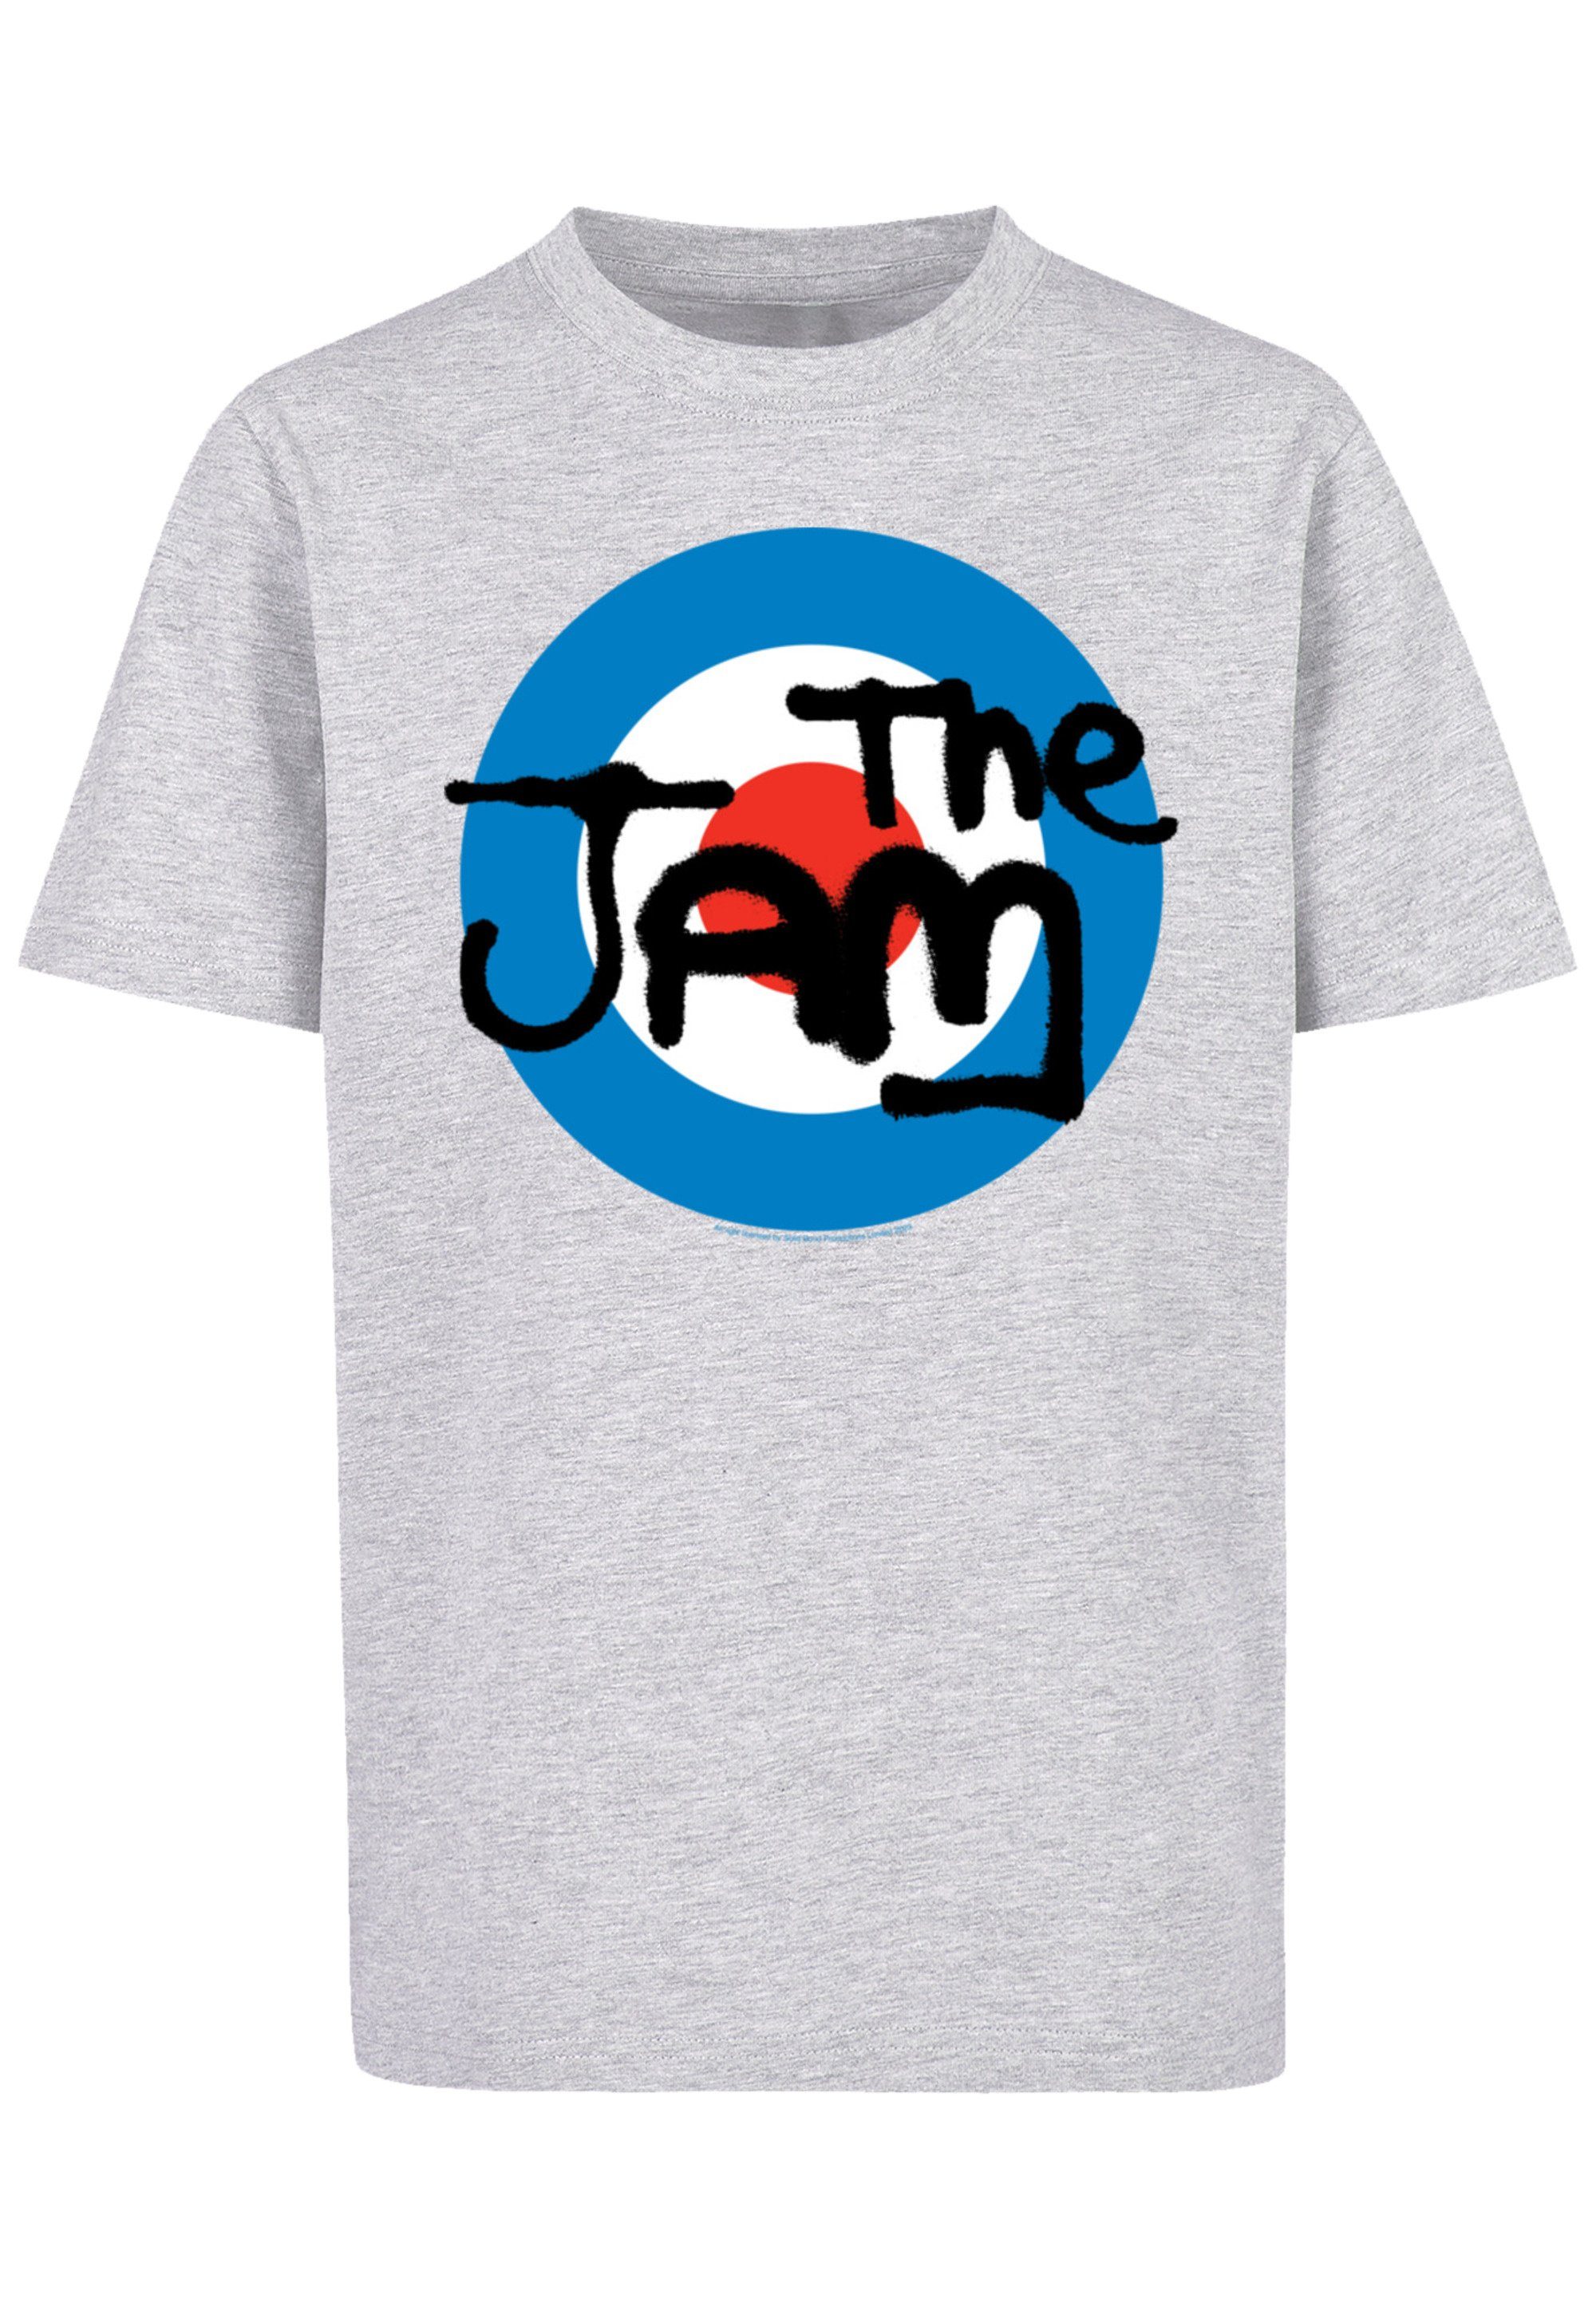 F4NT4STIC T-Shirt The Logo Premium Band Classic Jam heather Qualität grey